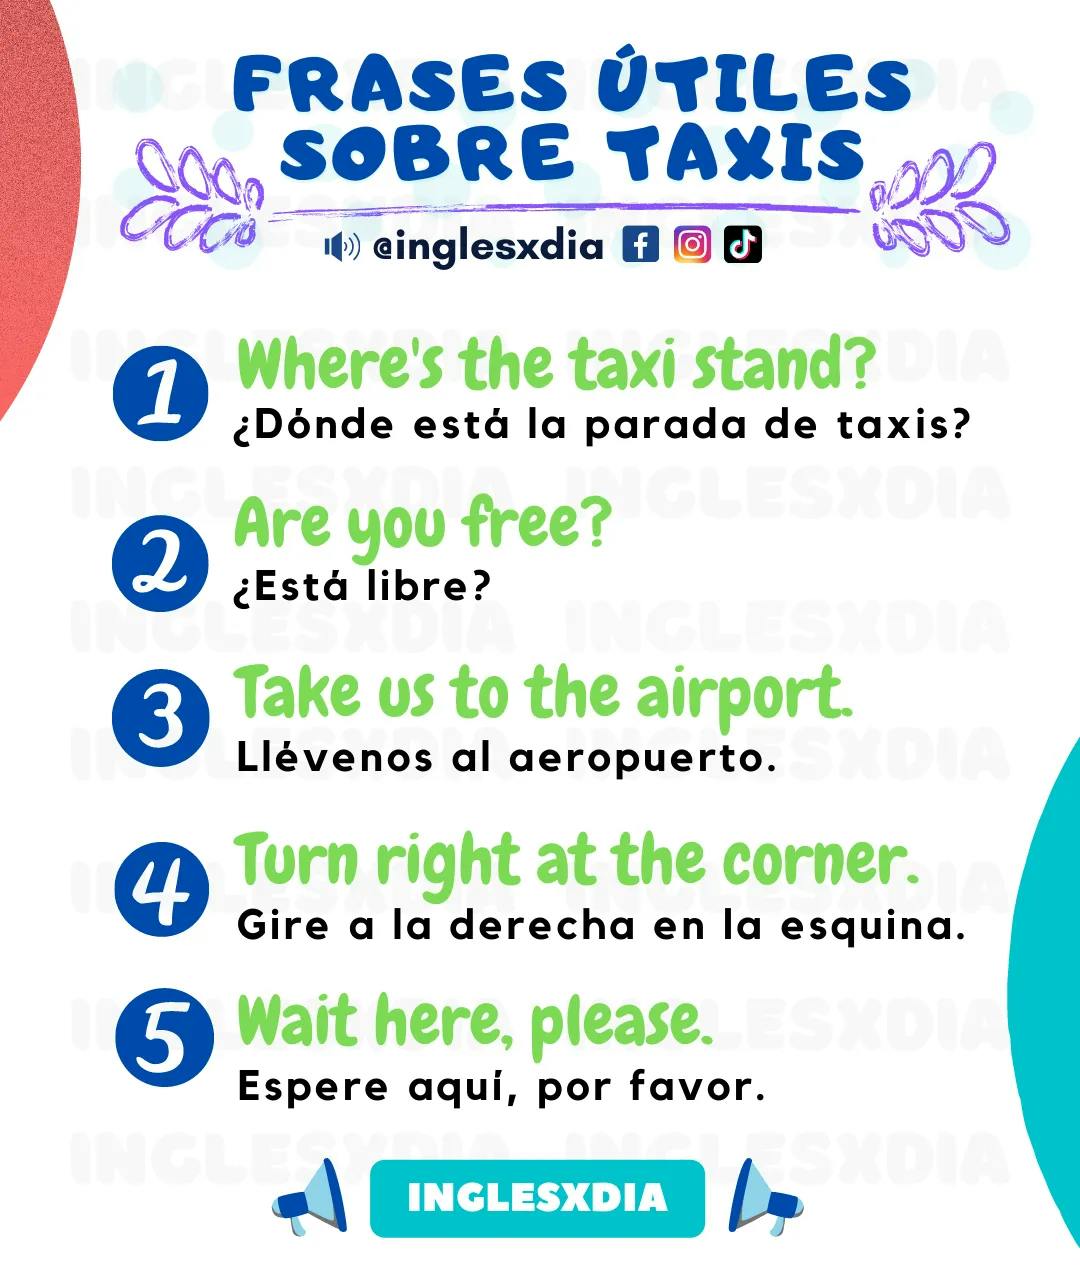 Curso de inglés en línea: frases en inglés para viajar en taxi